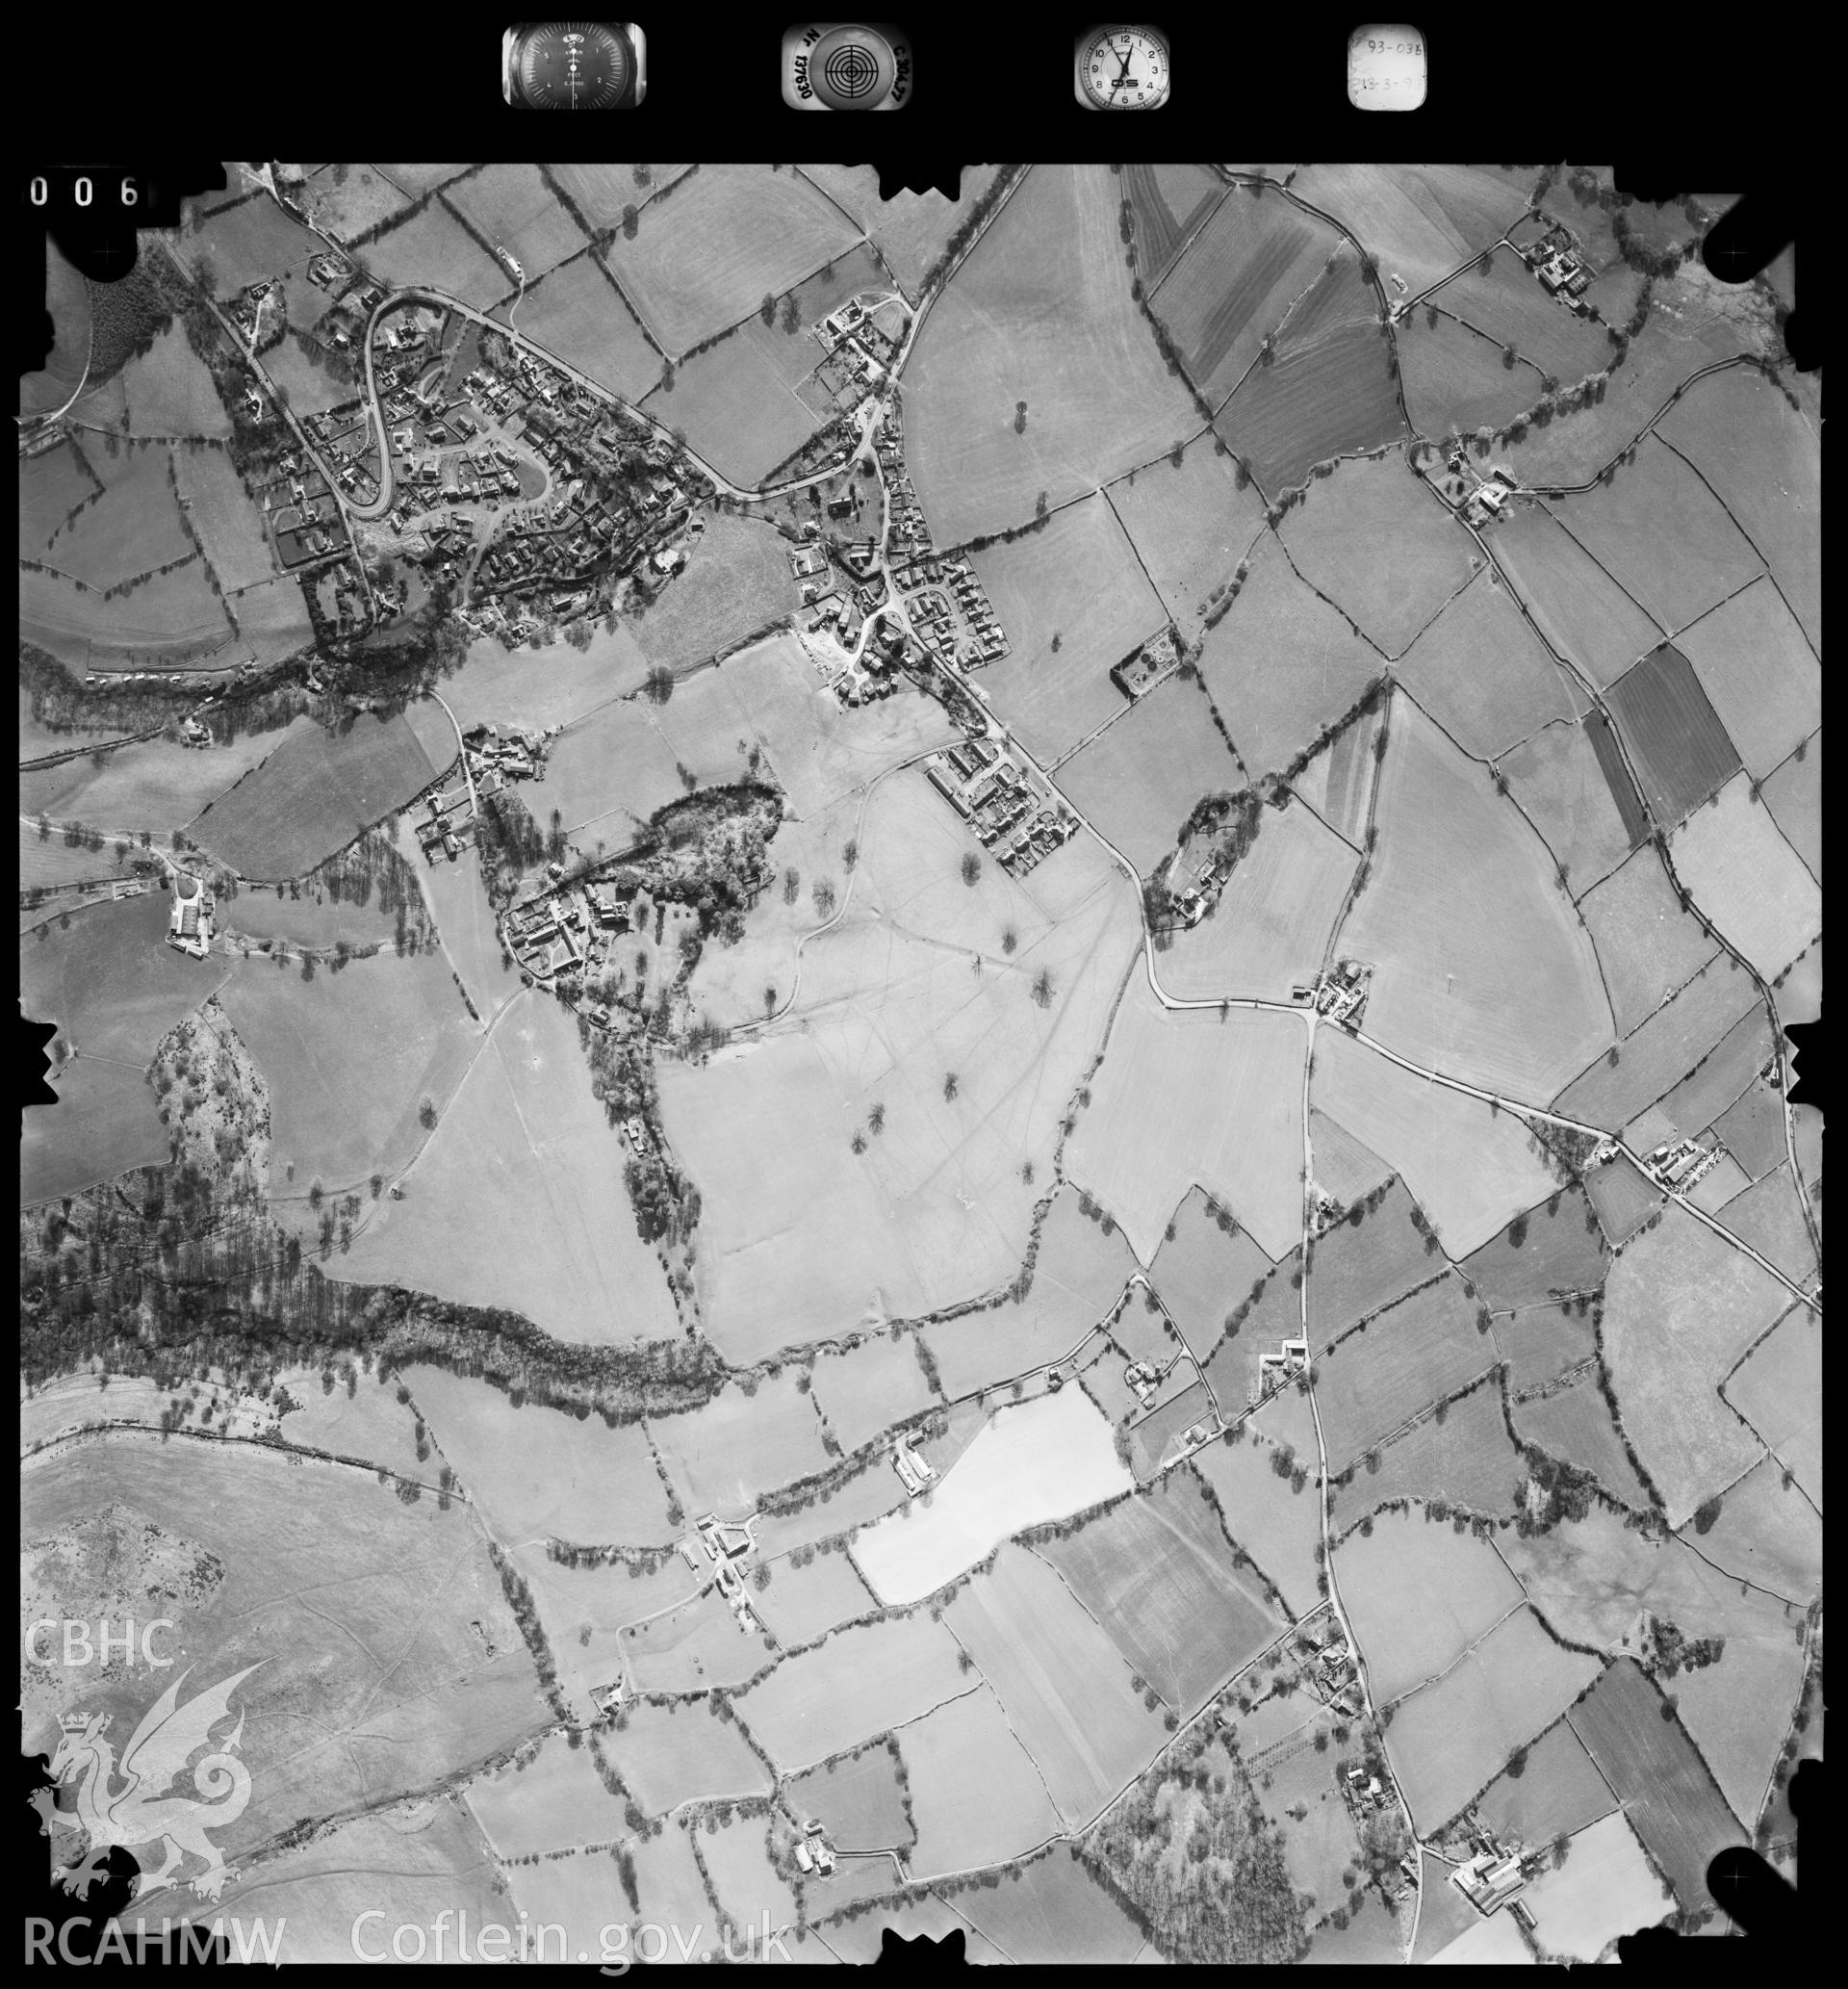 Digitized copy of an aerial photograph showing the Llanbedr Dyffryn Clwyd area taken by Ordnance Survey, 1993.